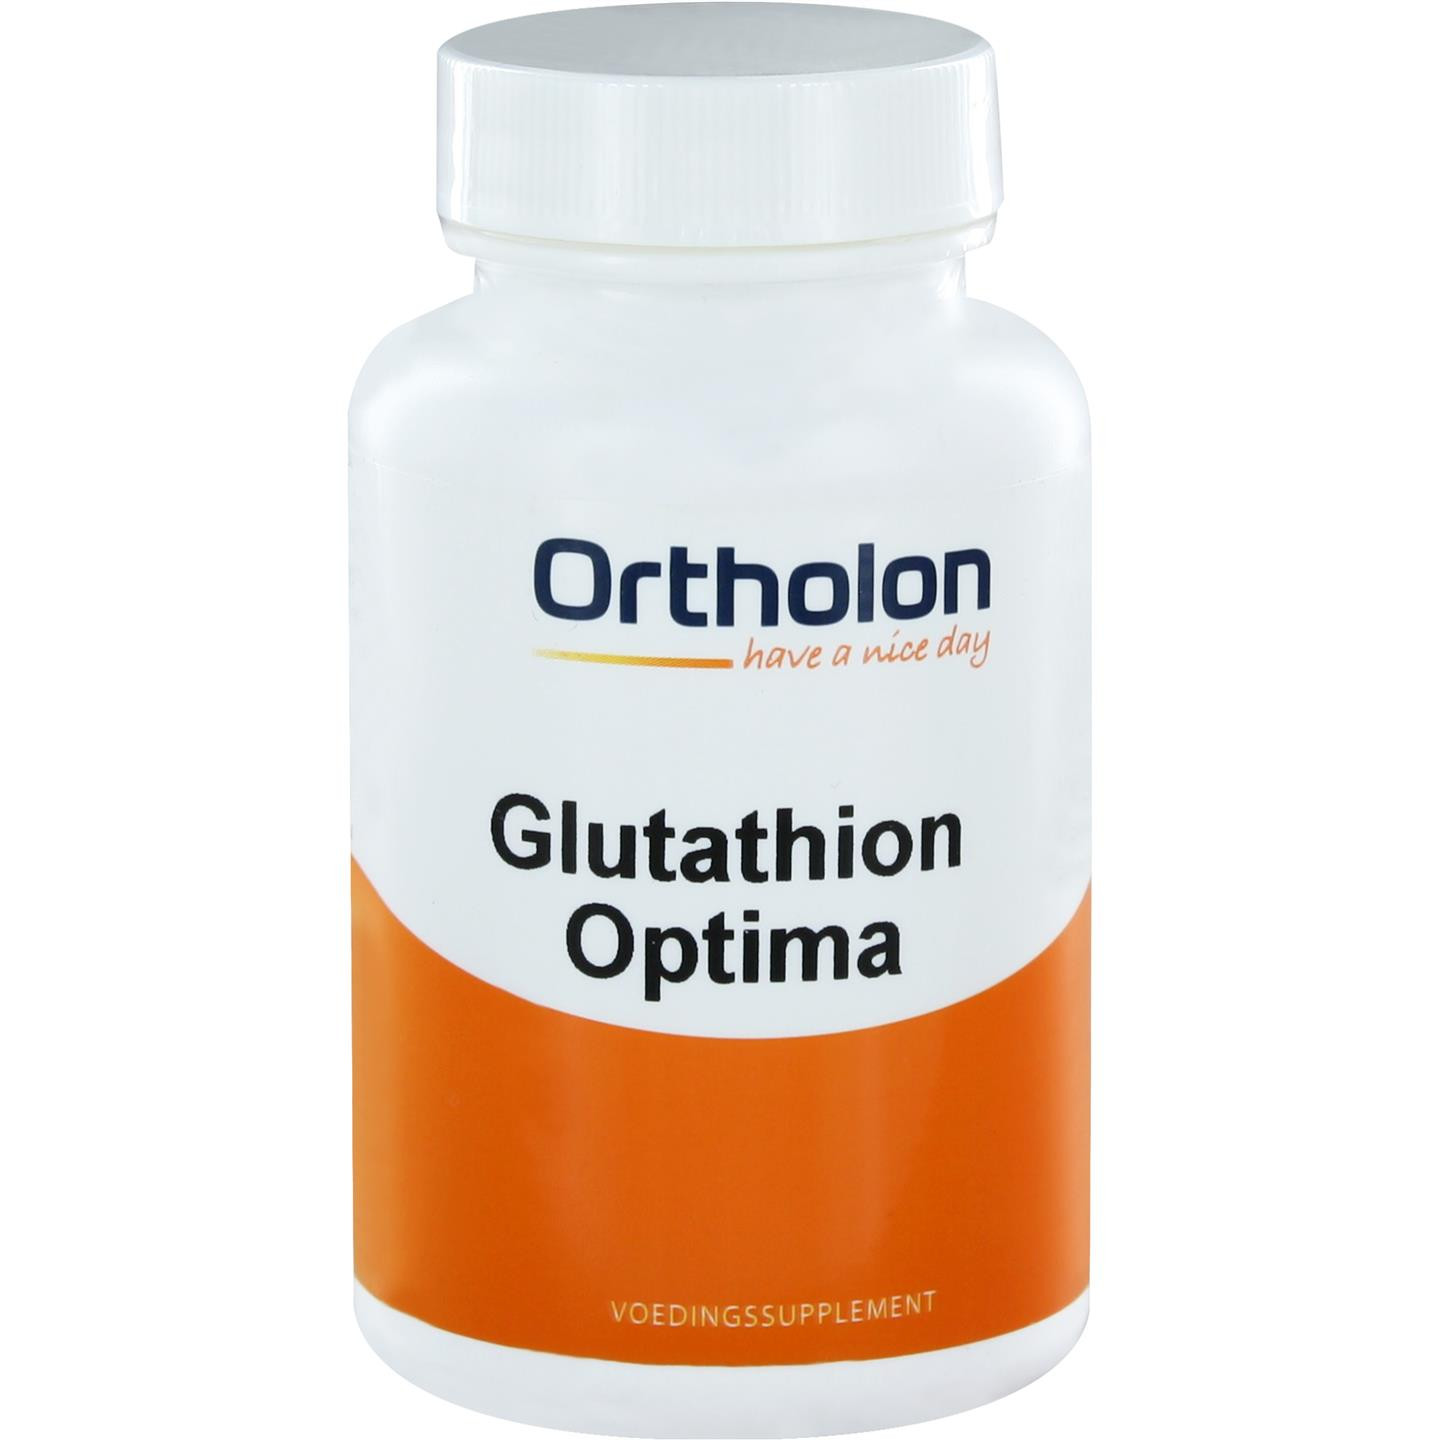 Glutathion Optima